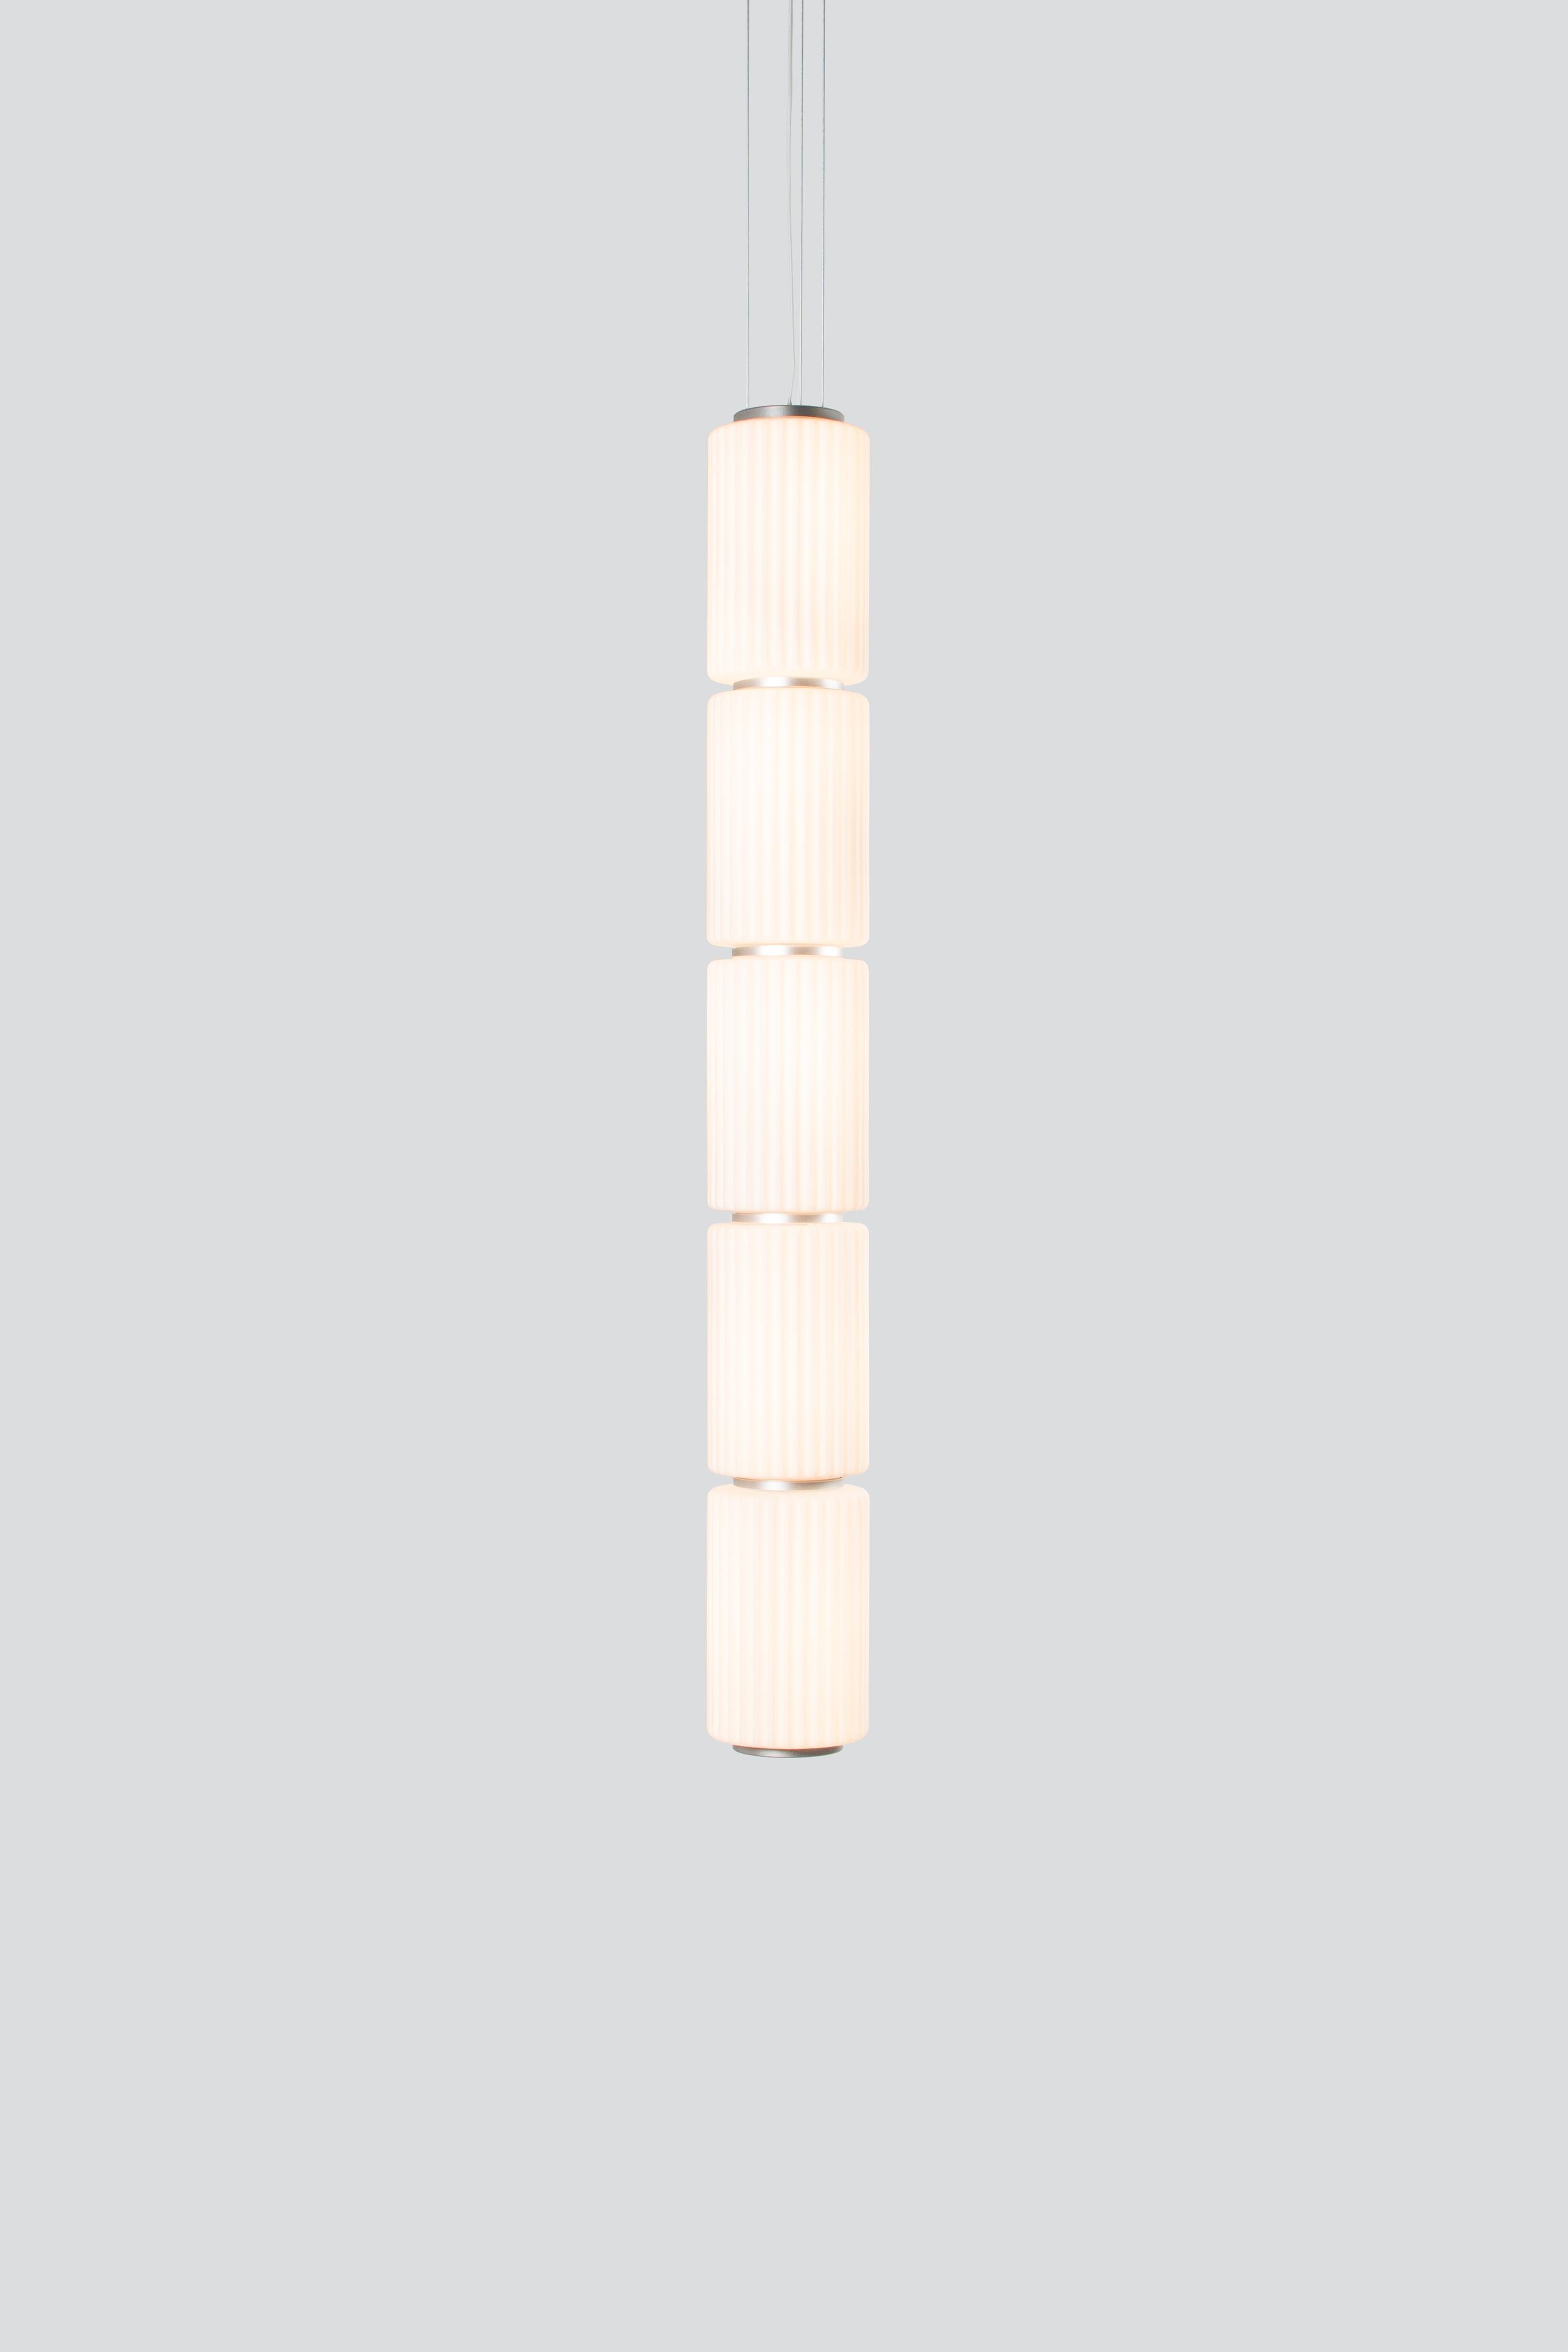 Organic Modern Contemporary Pendant Lamp 'Column' 175-5, Vertical, Ivory For Sale